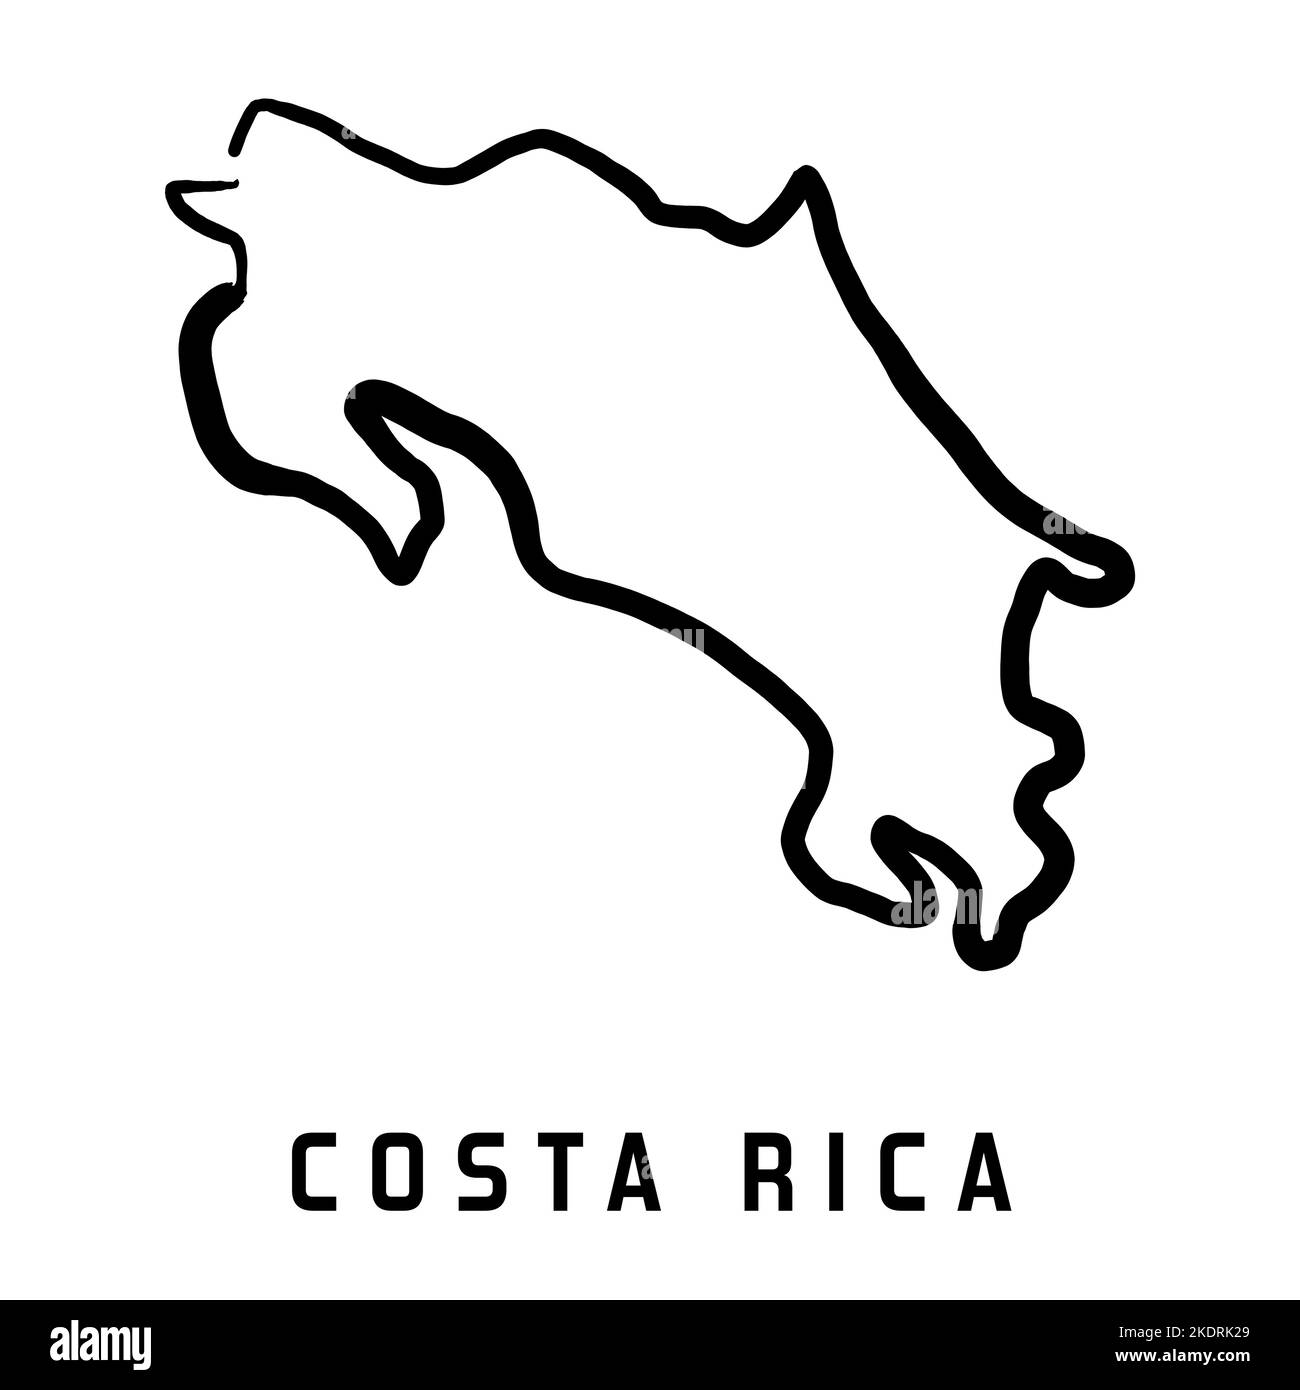 Costa Rica carte de pays simple contour. Carte de style simplifiée vectorisée à la main. Illustration de Vecteur